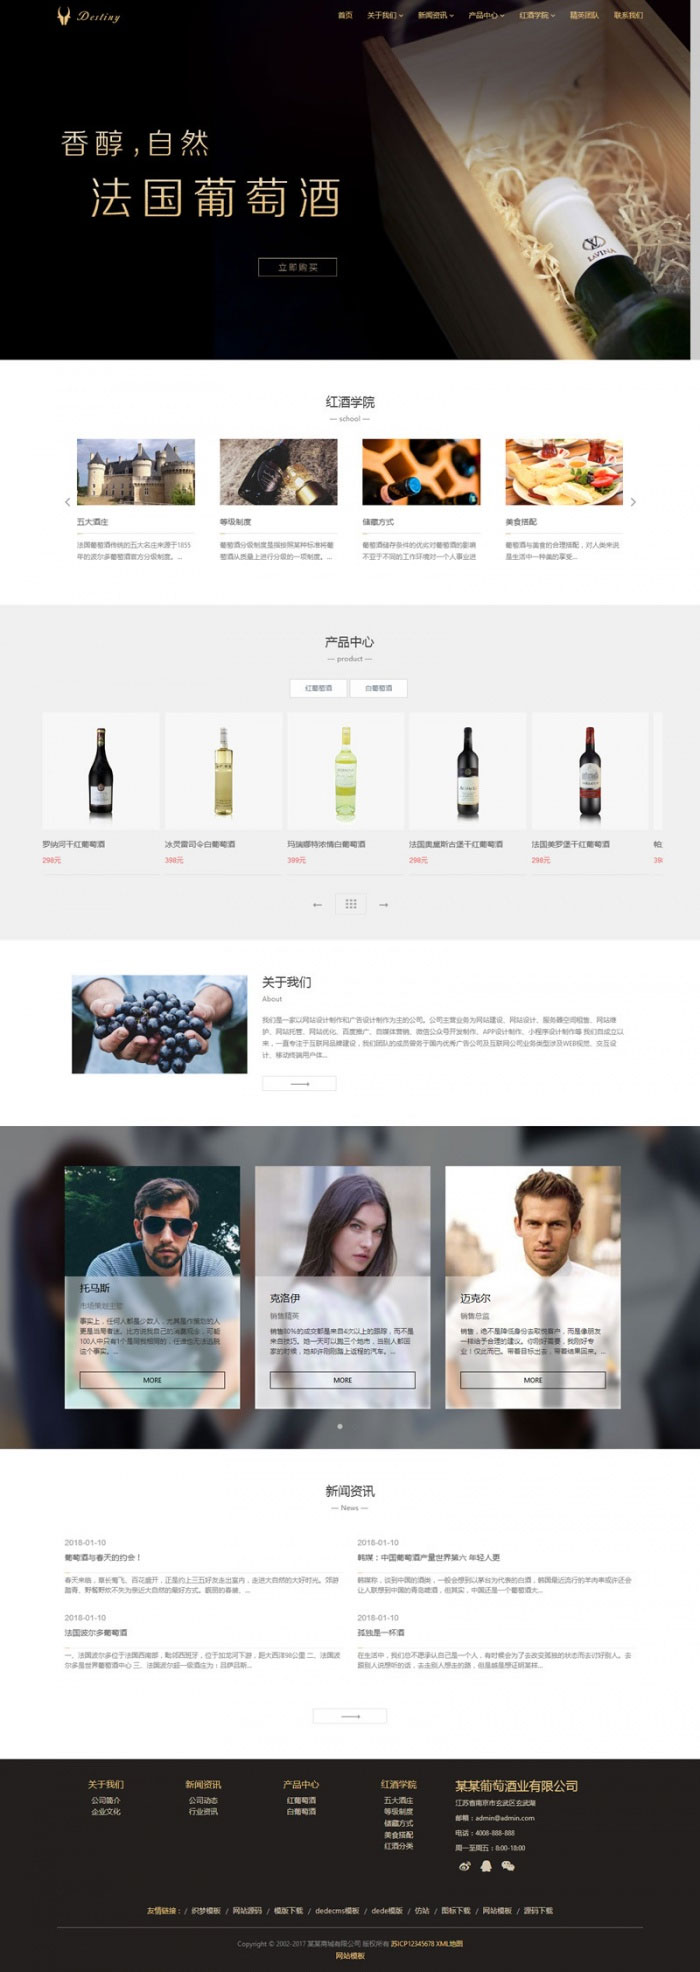 L231 织梦dedecms响应式酒业食品葡萄酒公司网站模板(自适应手机移动端)